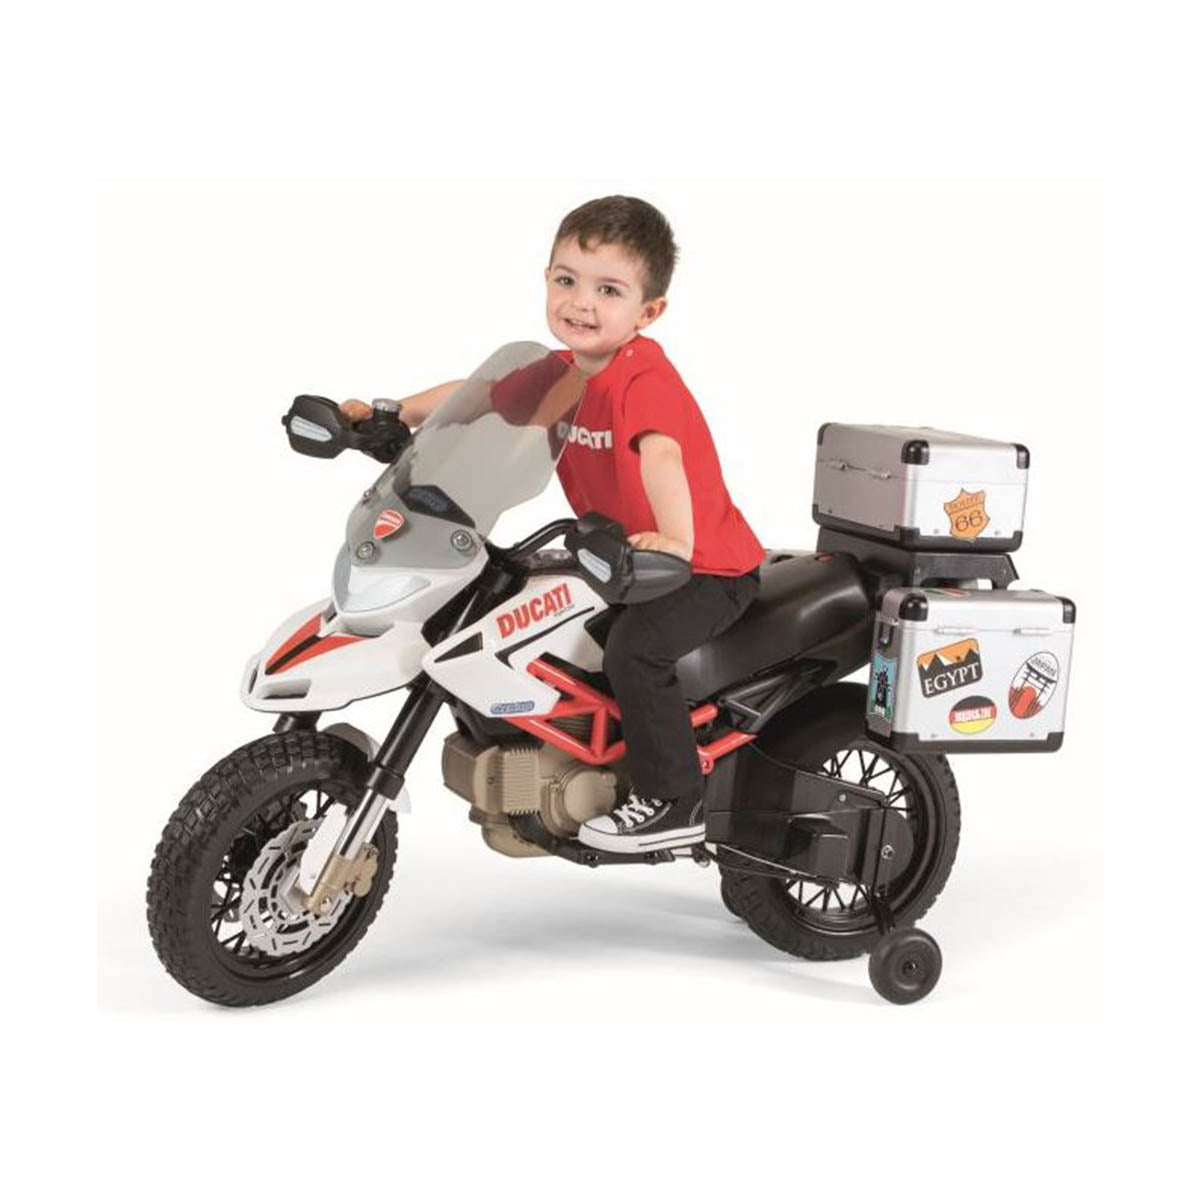 Куплю байки детские. Электромотоцикл Peg Perego Ducati. Peg-Perego мотоцикл Ducati Hypercross. Электромотоцикл Дукати Пег Перего. Детский электромотоцикл Peg-Perego Ducati Enduro.